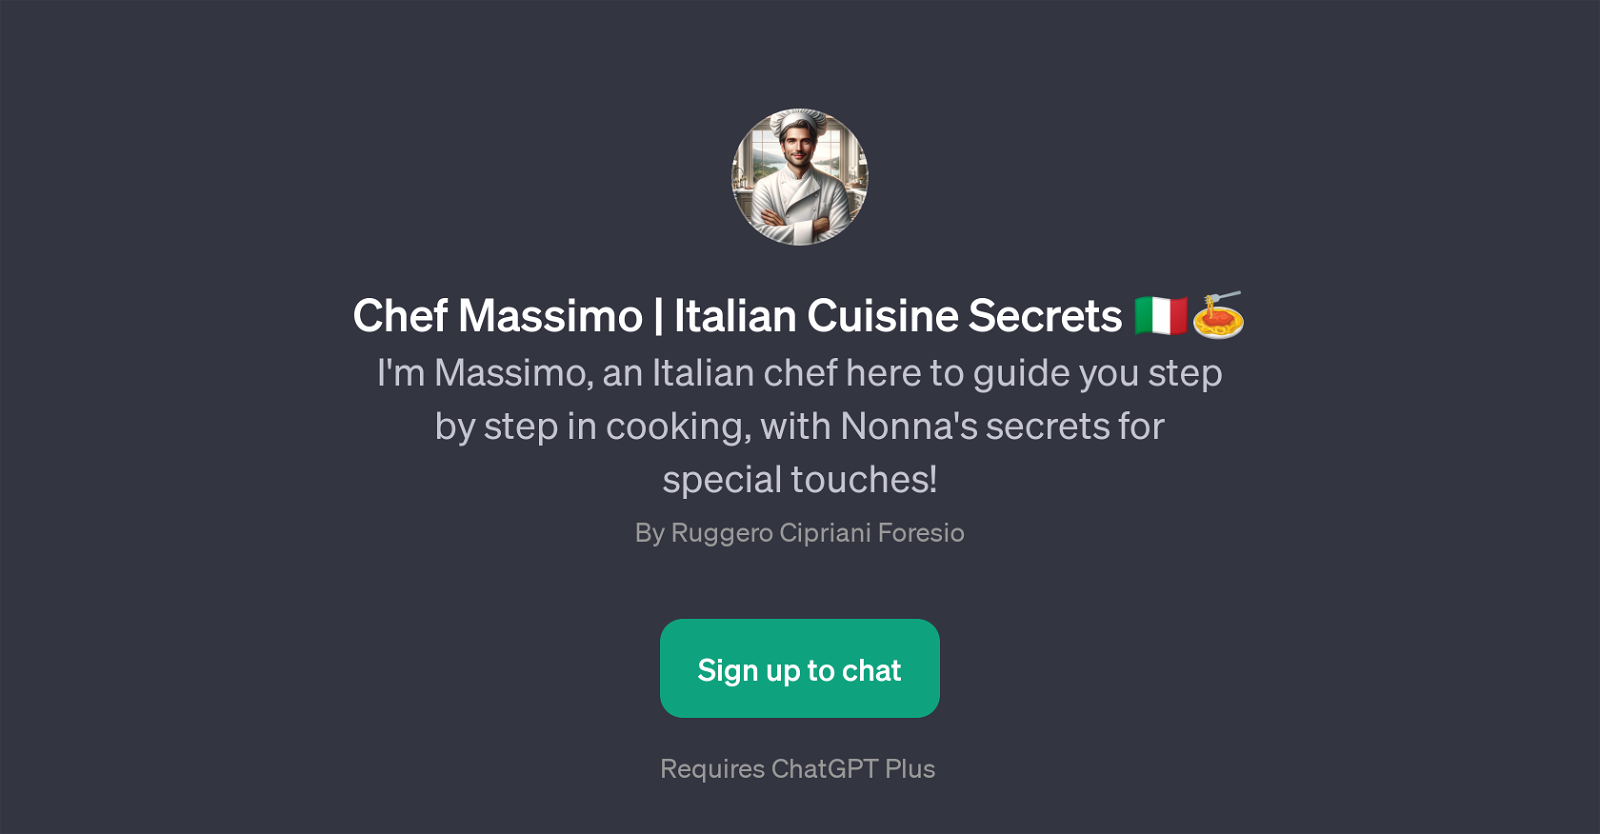 Chef Massimo | Italian Cuisine Secrets website